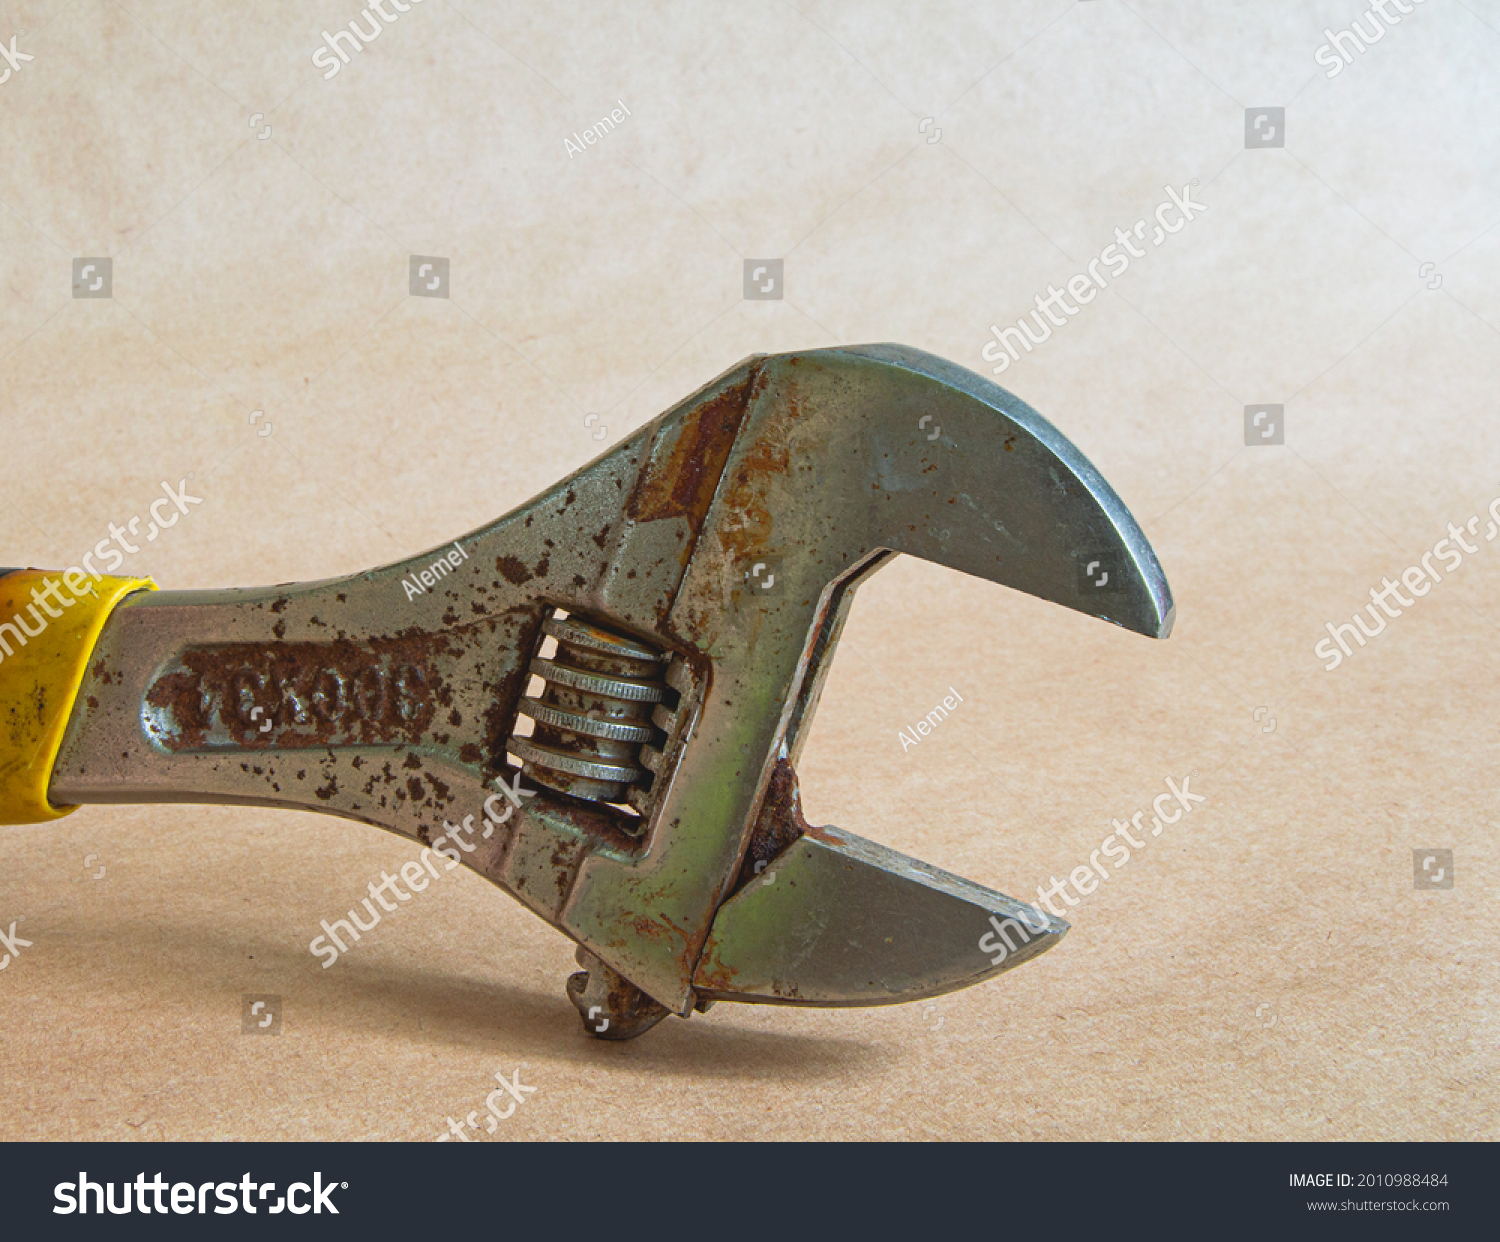 Rusty adjustable wrench isolated on vintage background. Plumbing tool. Joiner's tool. Macro. #2010988484